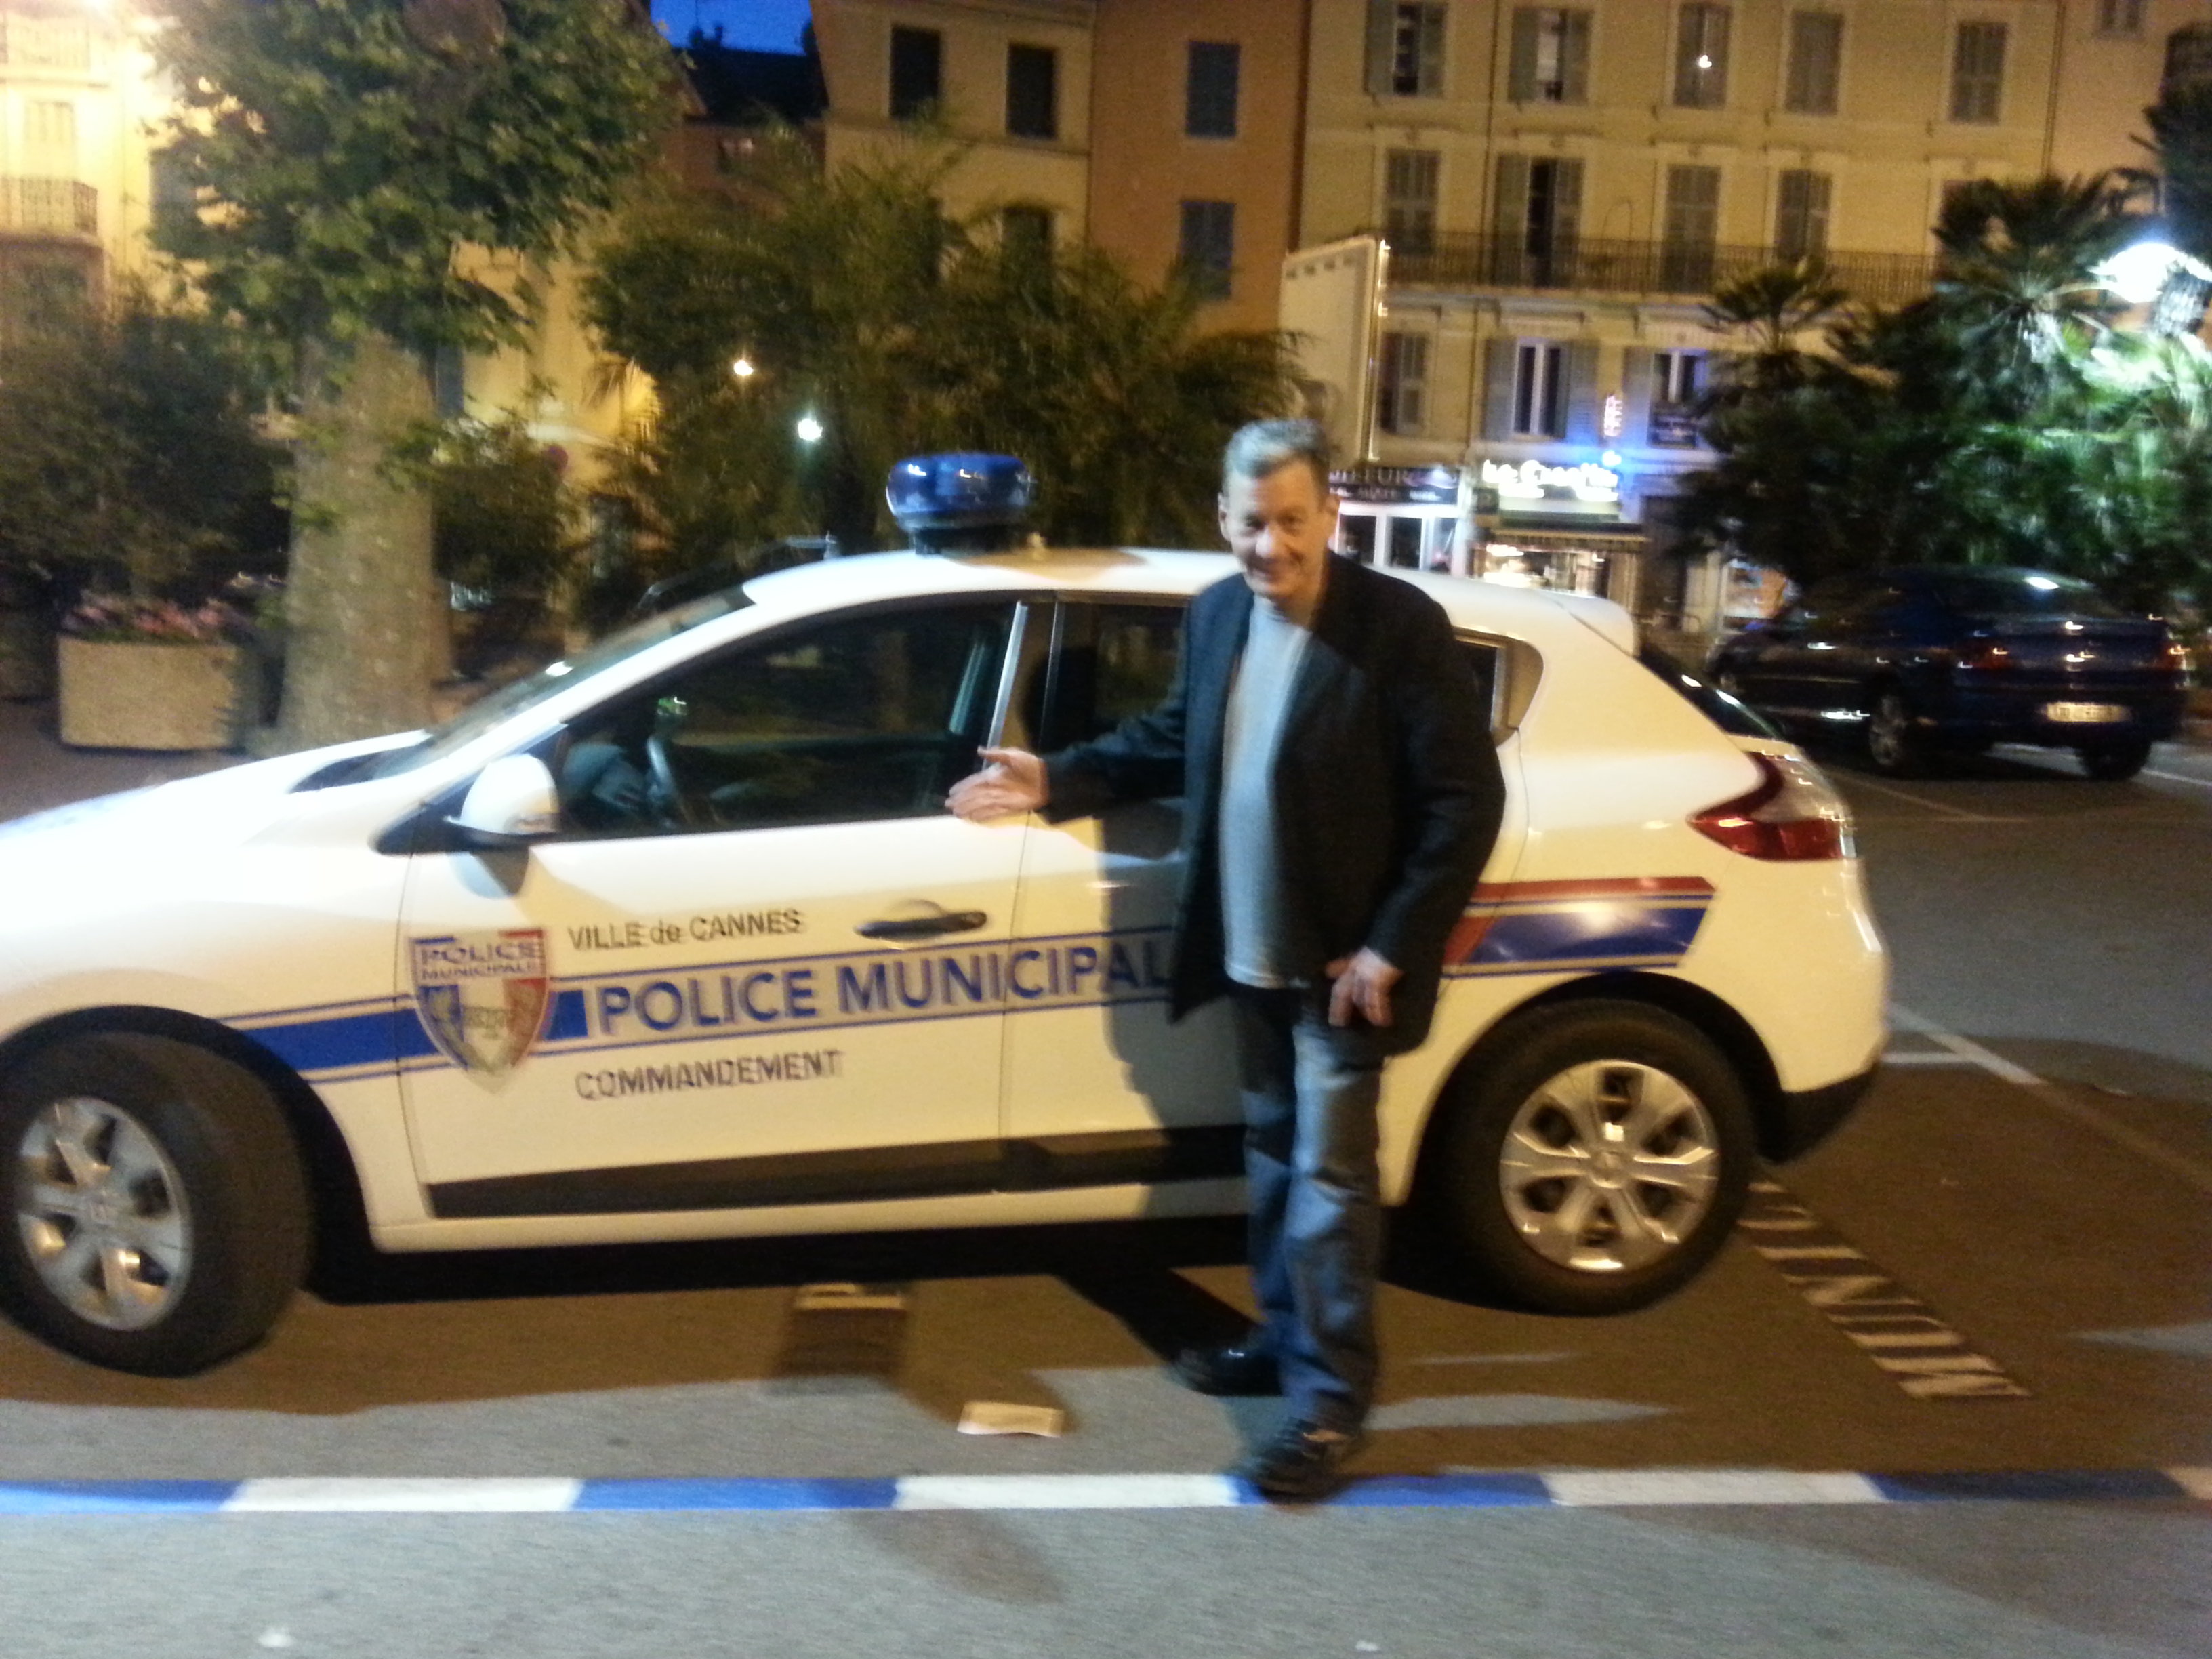 Feeling securite in Cannes, June 02 2014